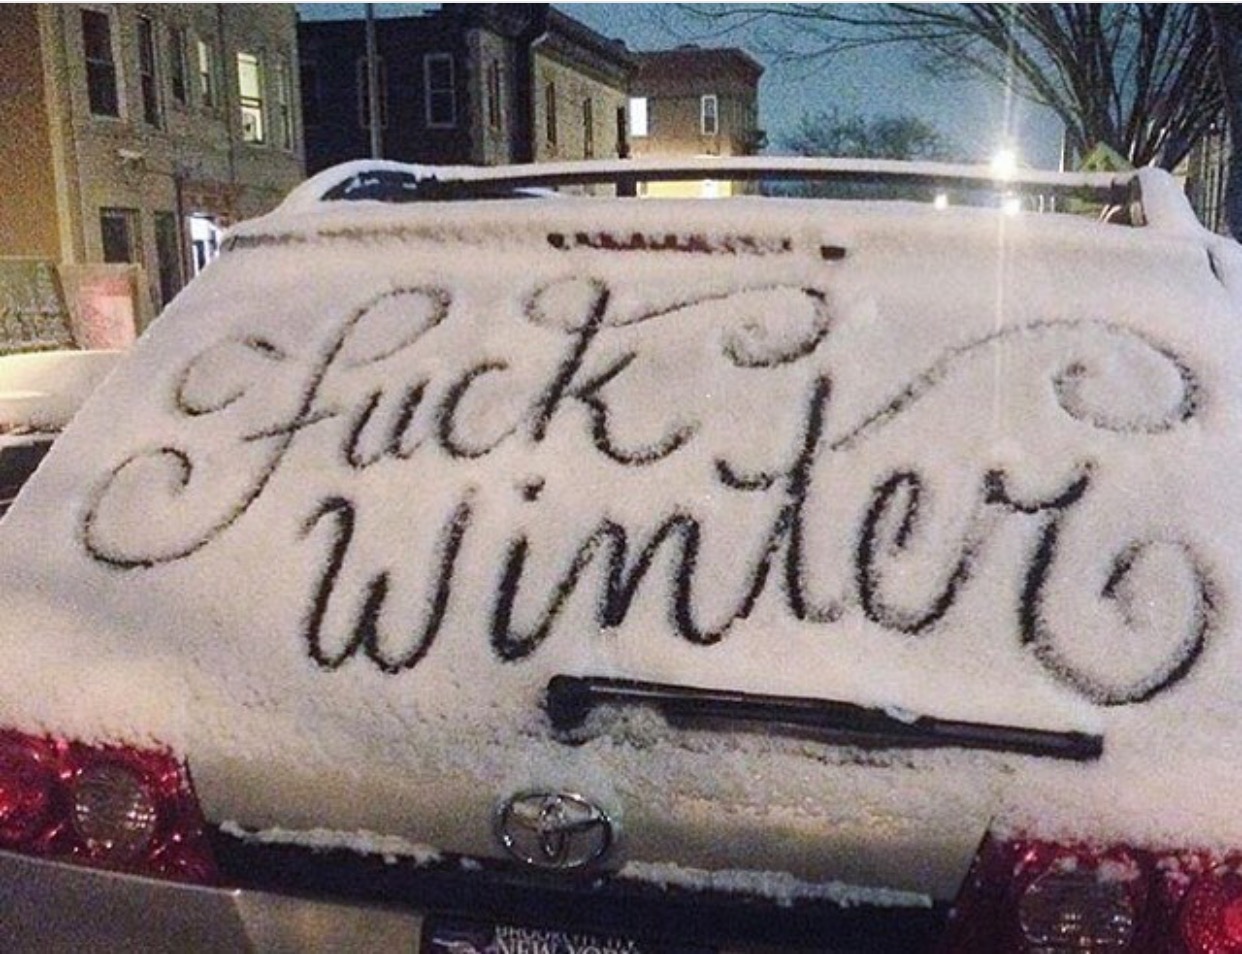 Fuck winter